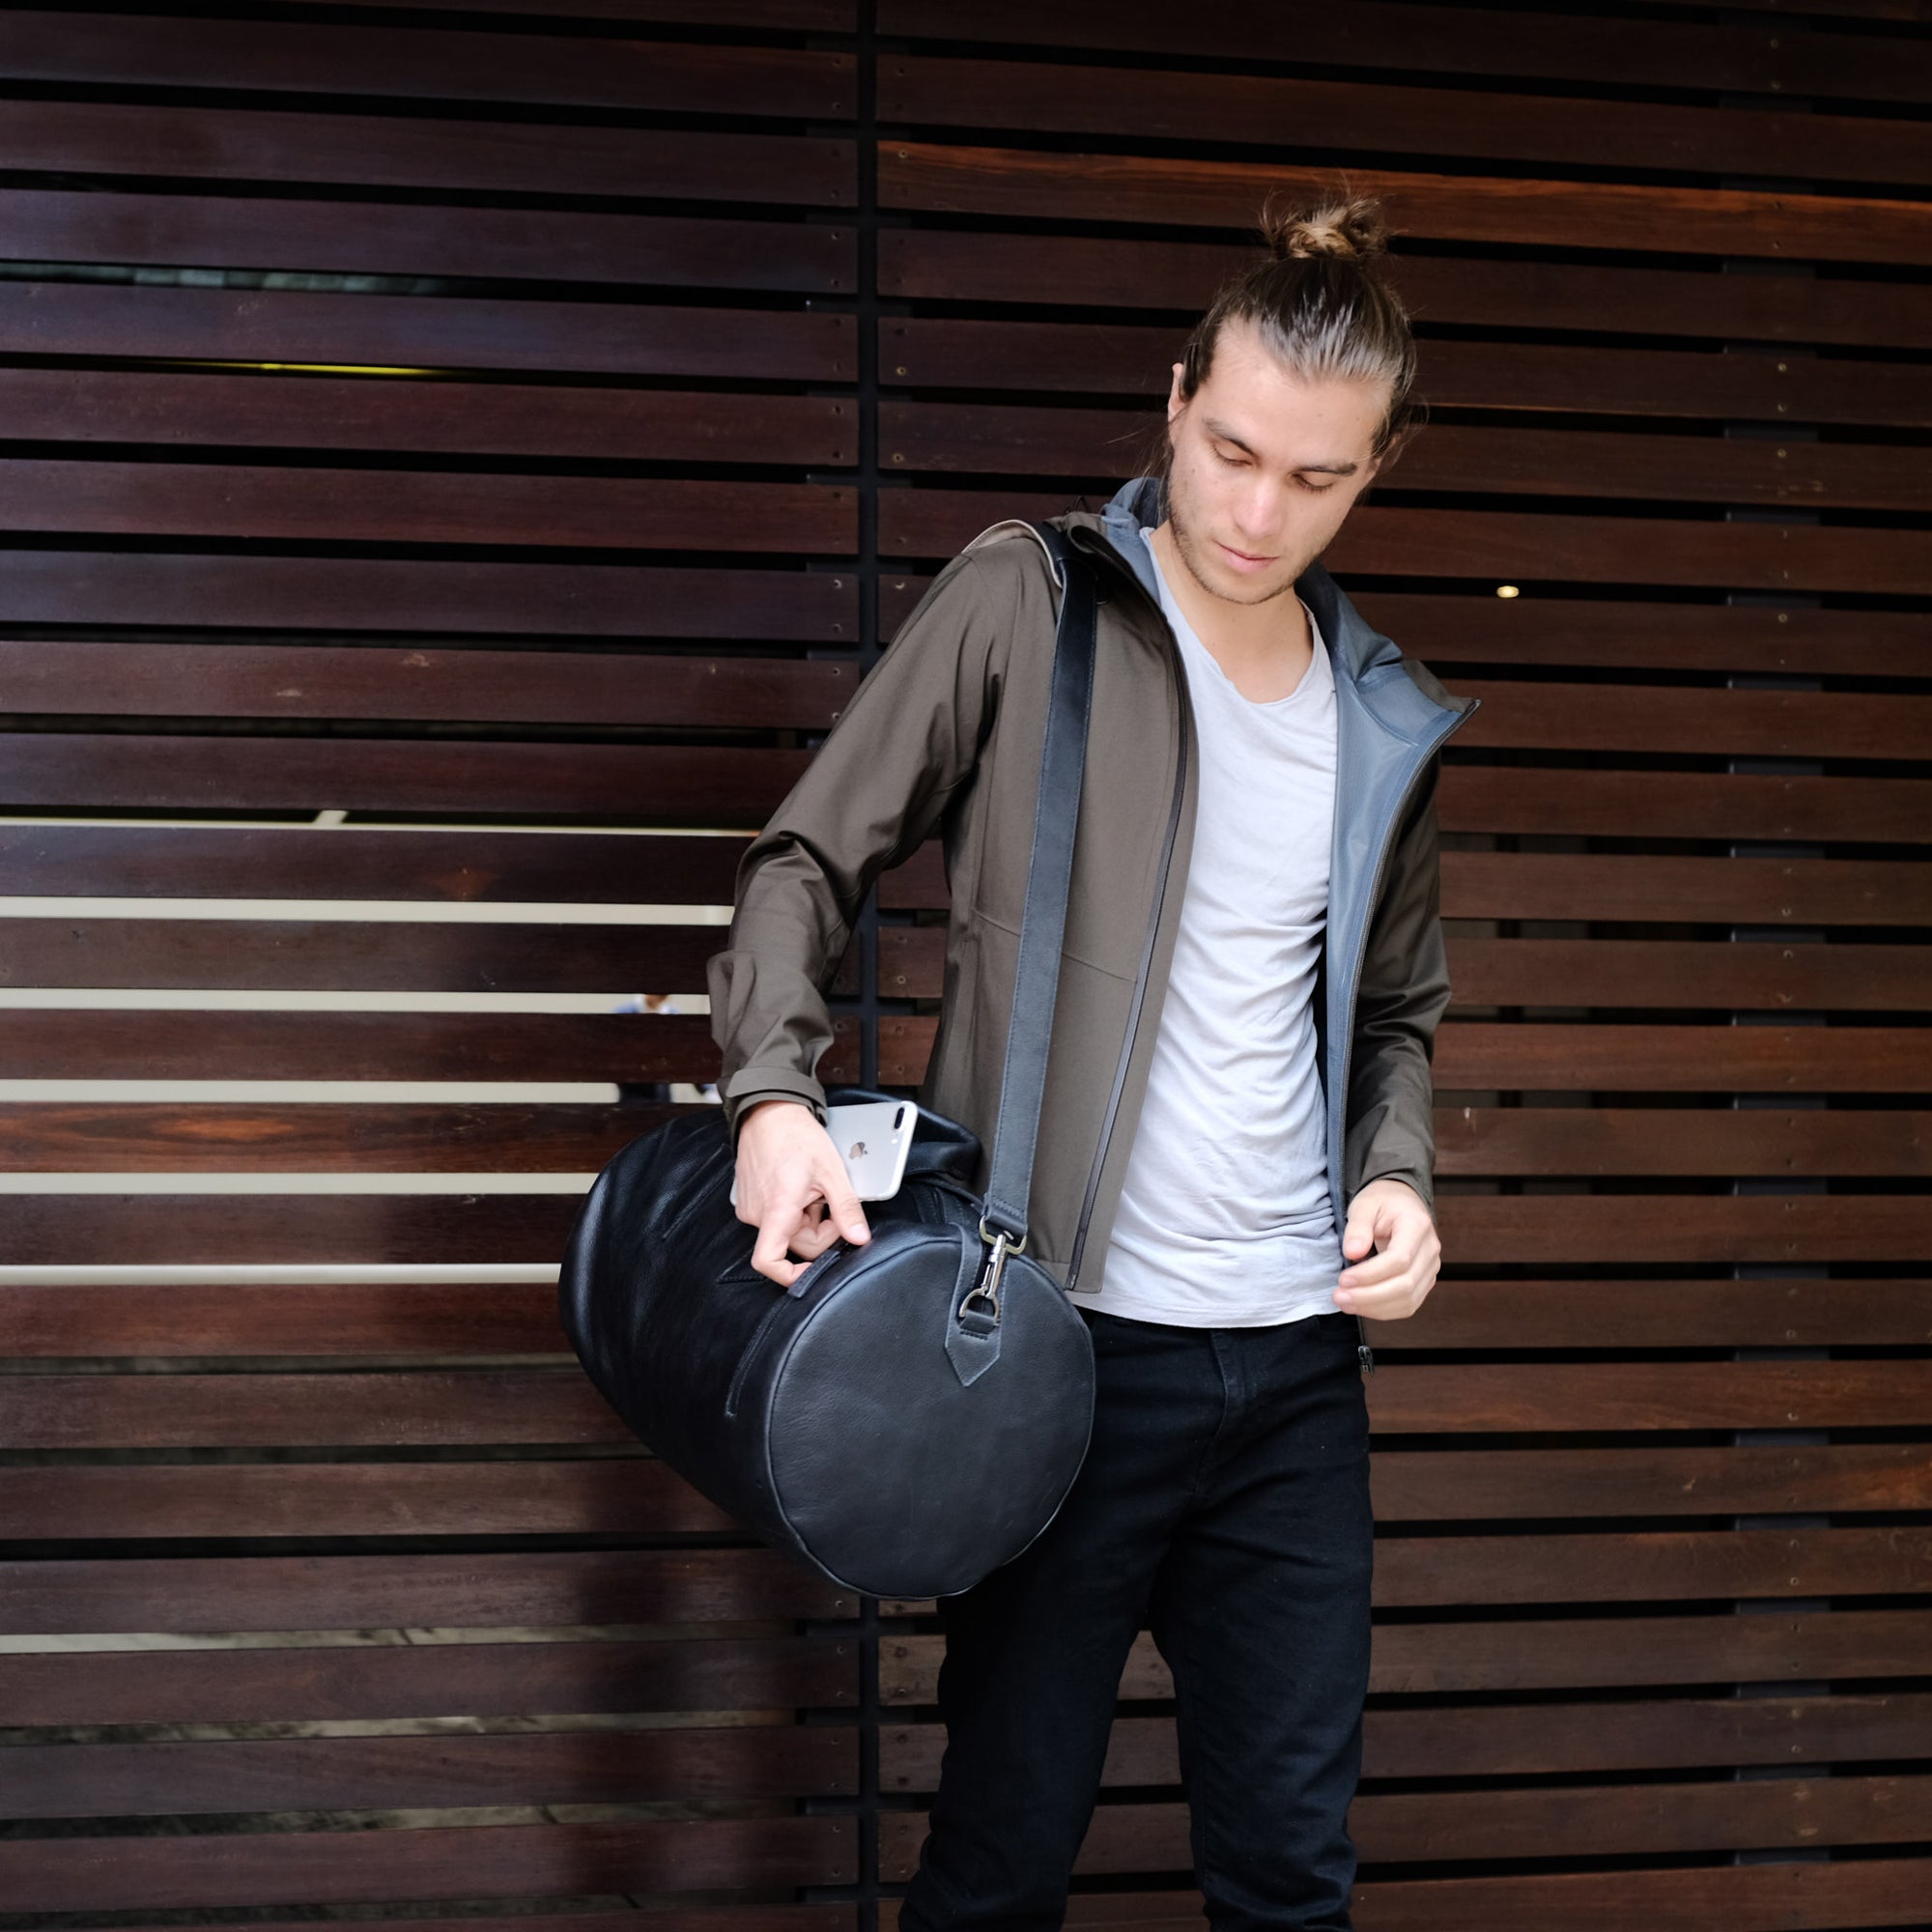 Style. Black leather weekender travel bag. Carry on cabin bag